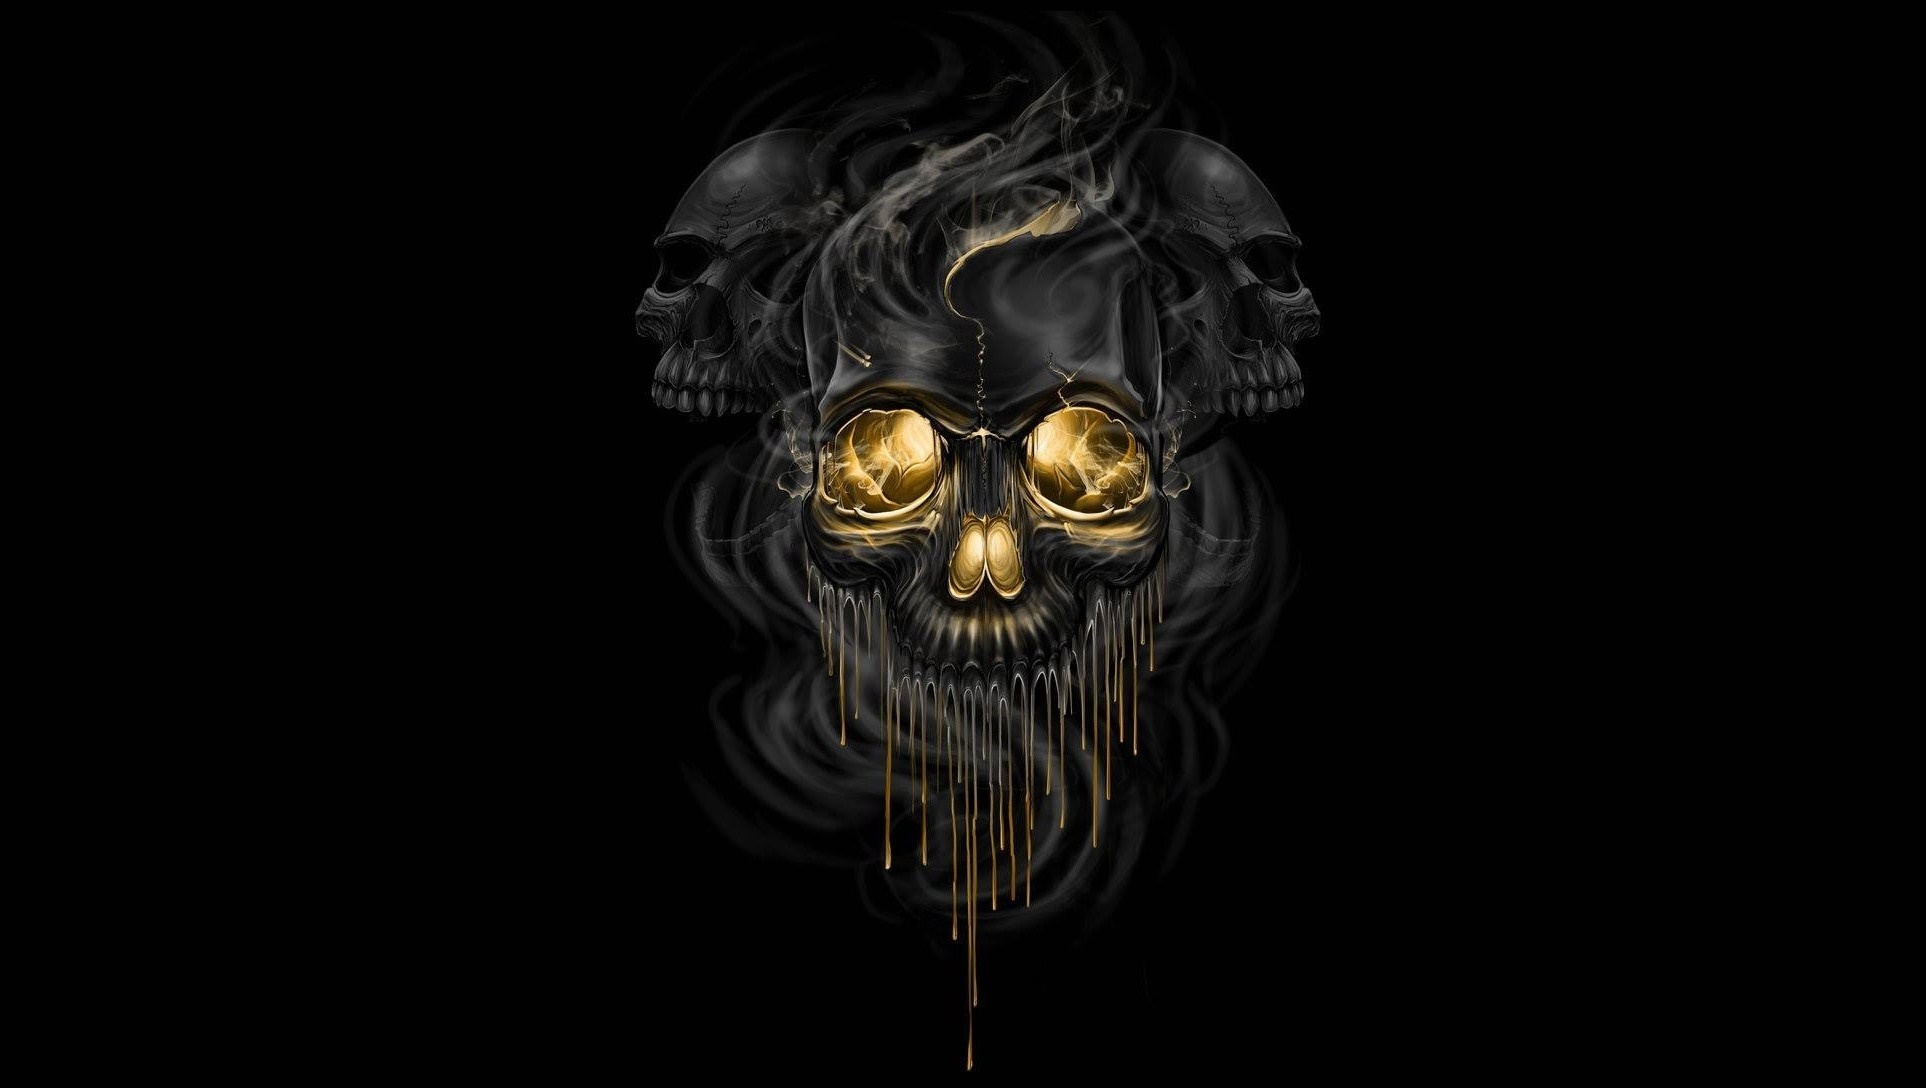 illustration, artwork, skull, darkness, costume, screenshot, computer wallpaper, special effects Gallery HD Wallpaper